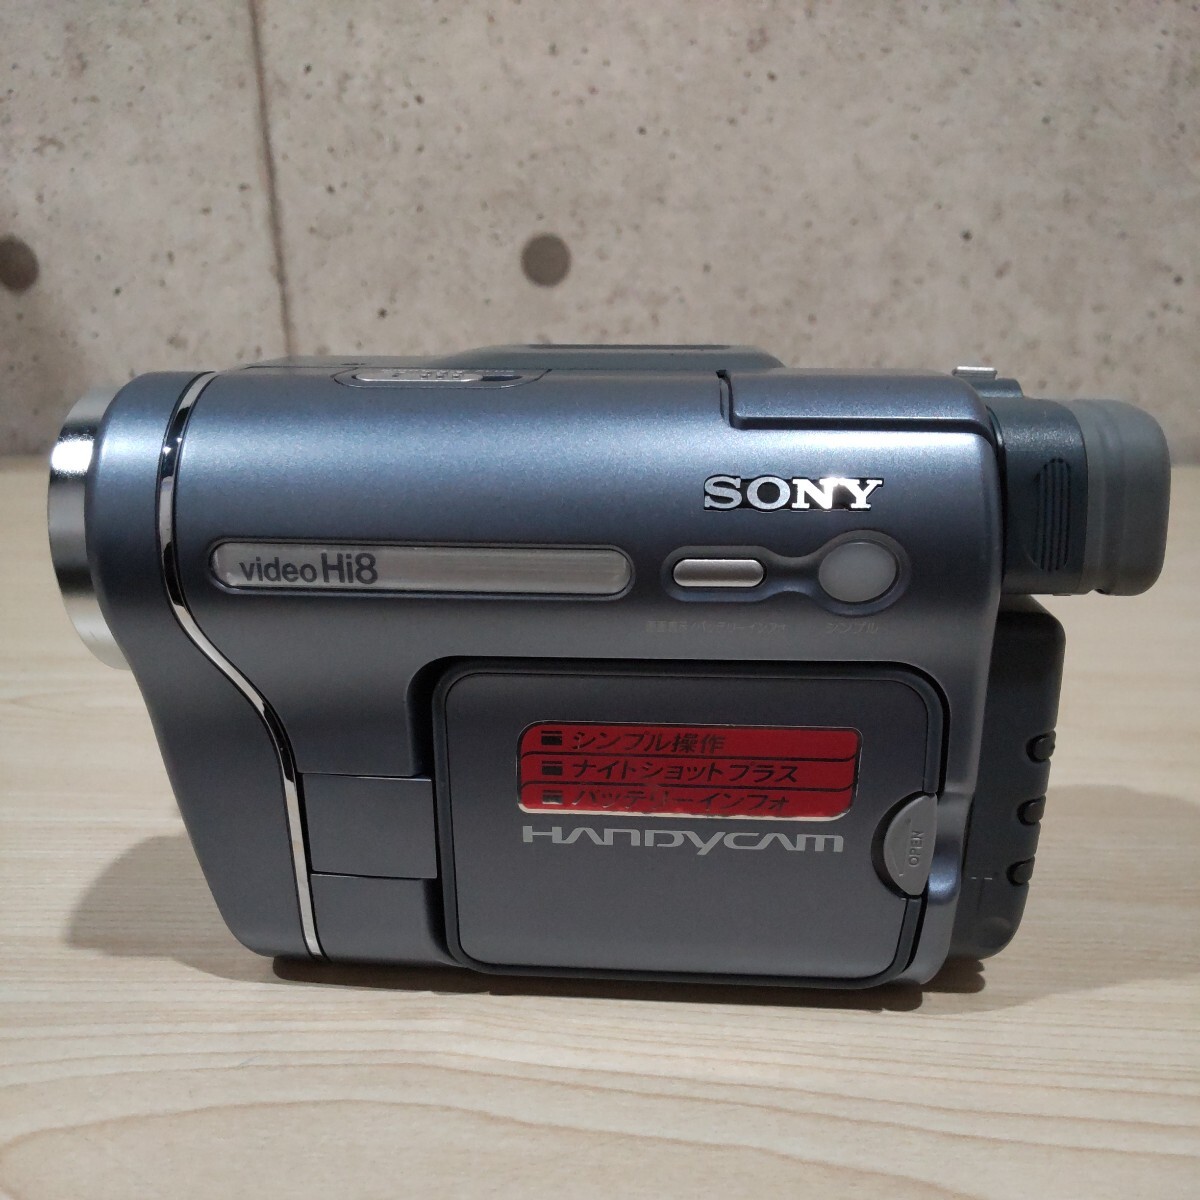 SNR240517 SONY video Hi8 Handycam CCD-TRV116 2004 year made video camera recorder HANDYCAM Sony digital video camera present condition goods 